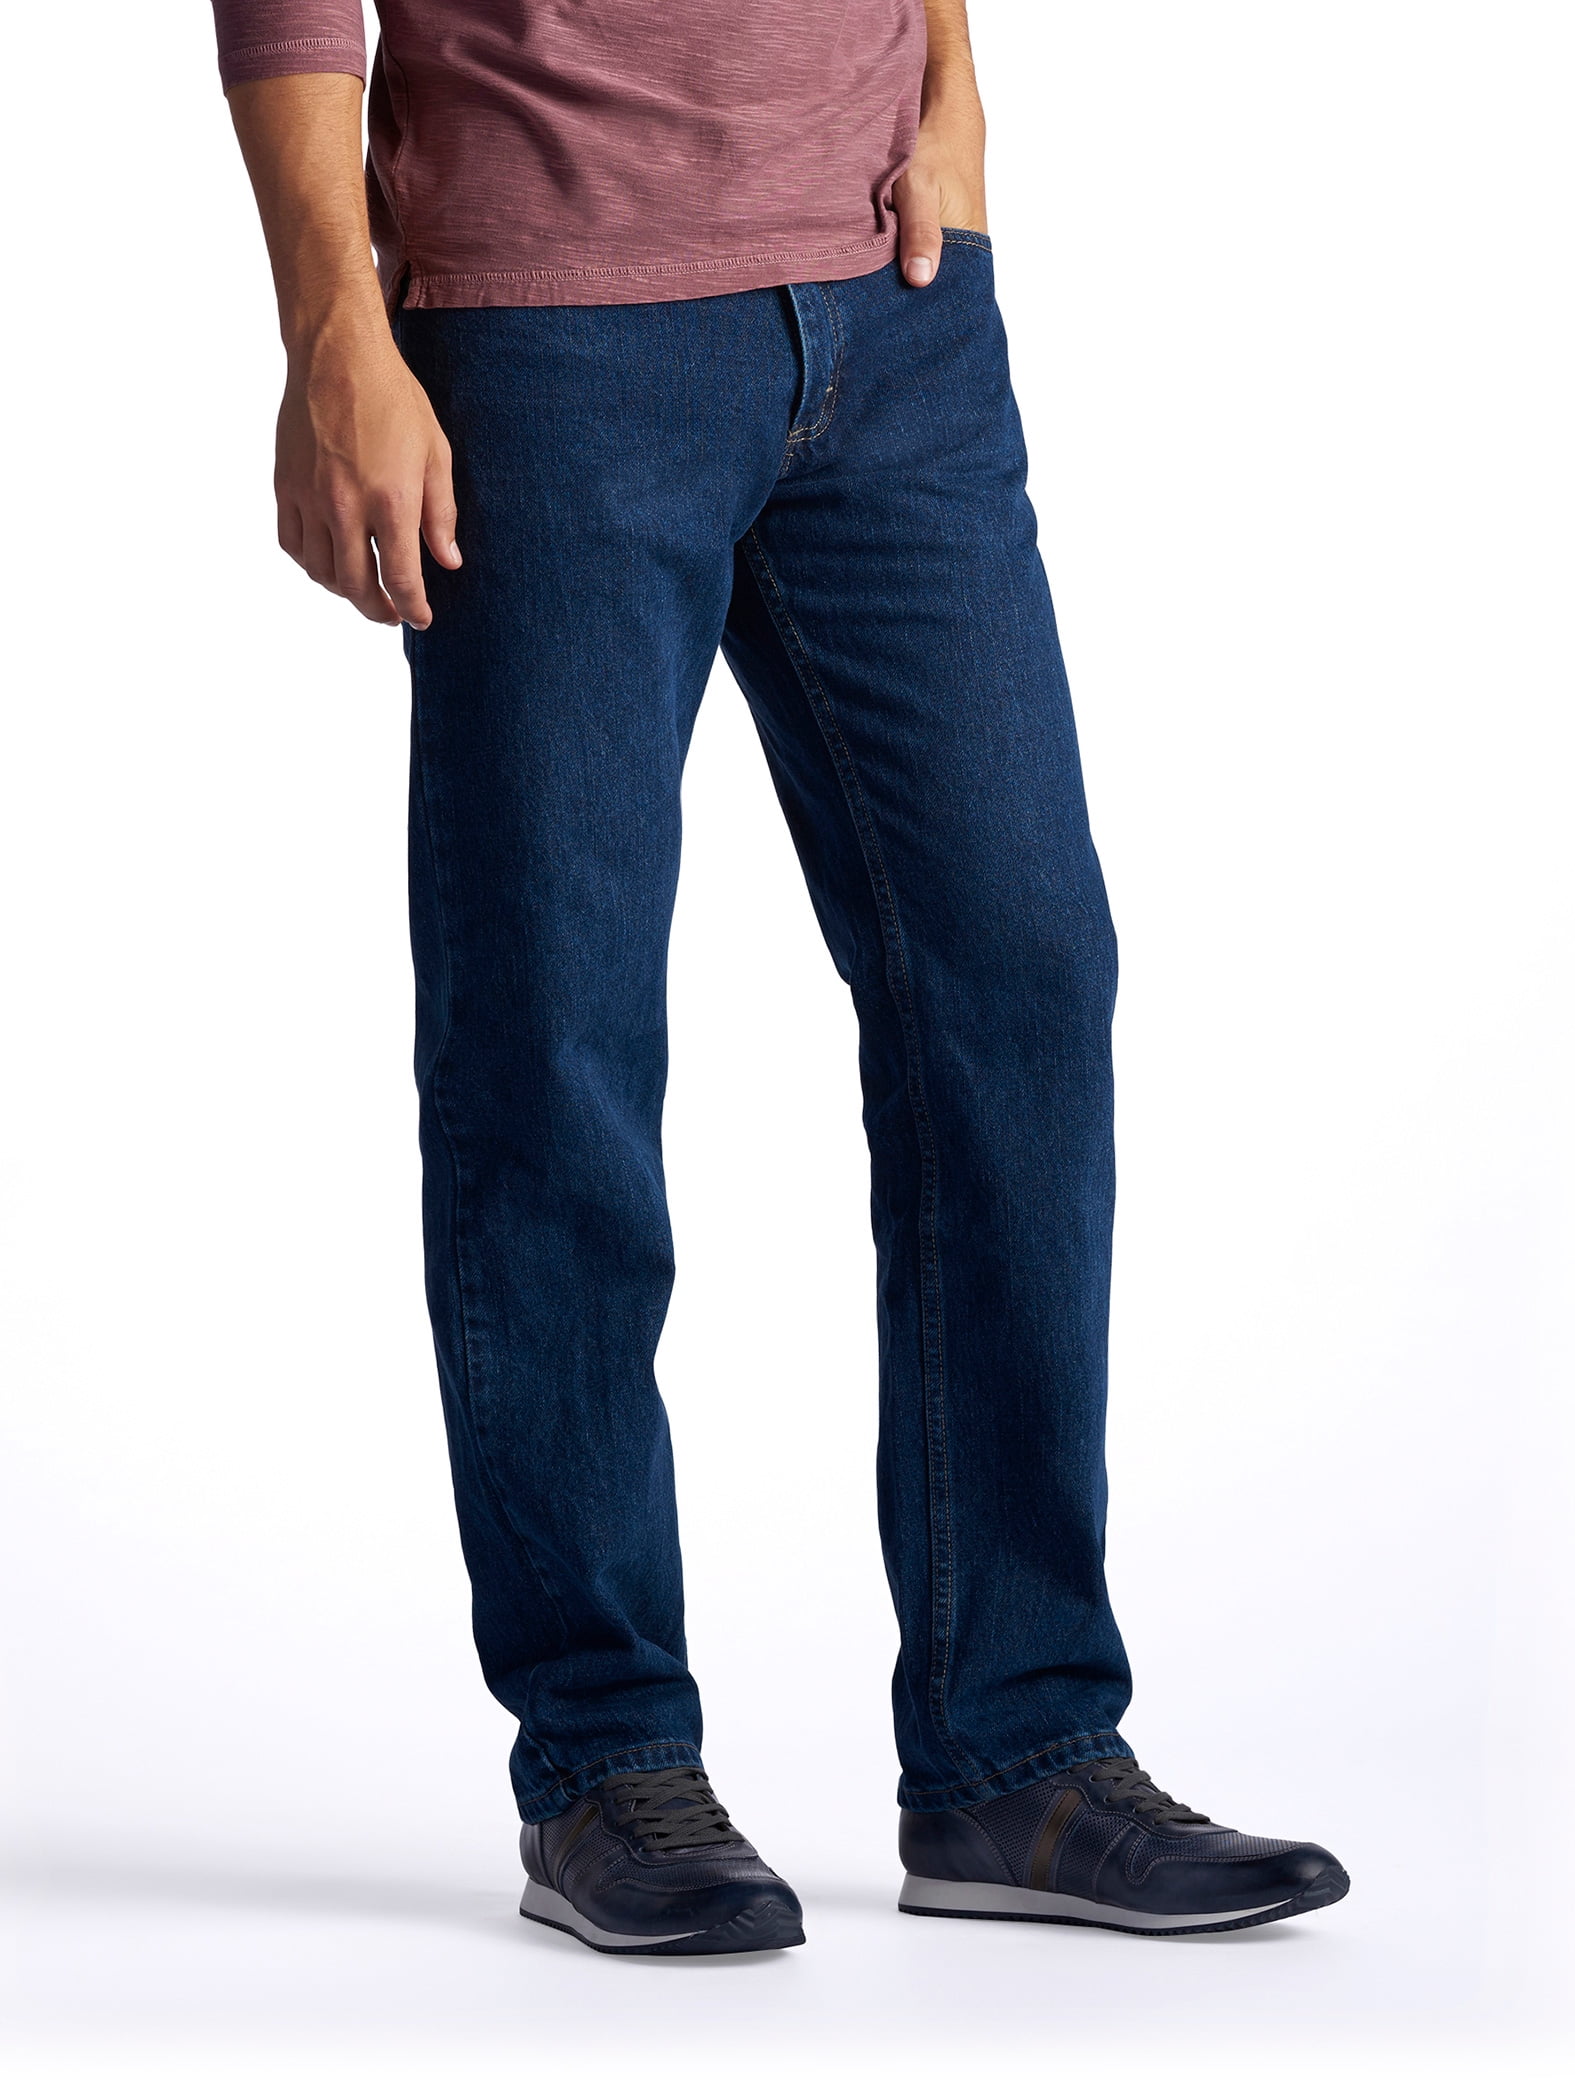 Lee Men's Regular Fit Straight Leg Jeans - Walmart.com